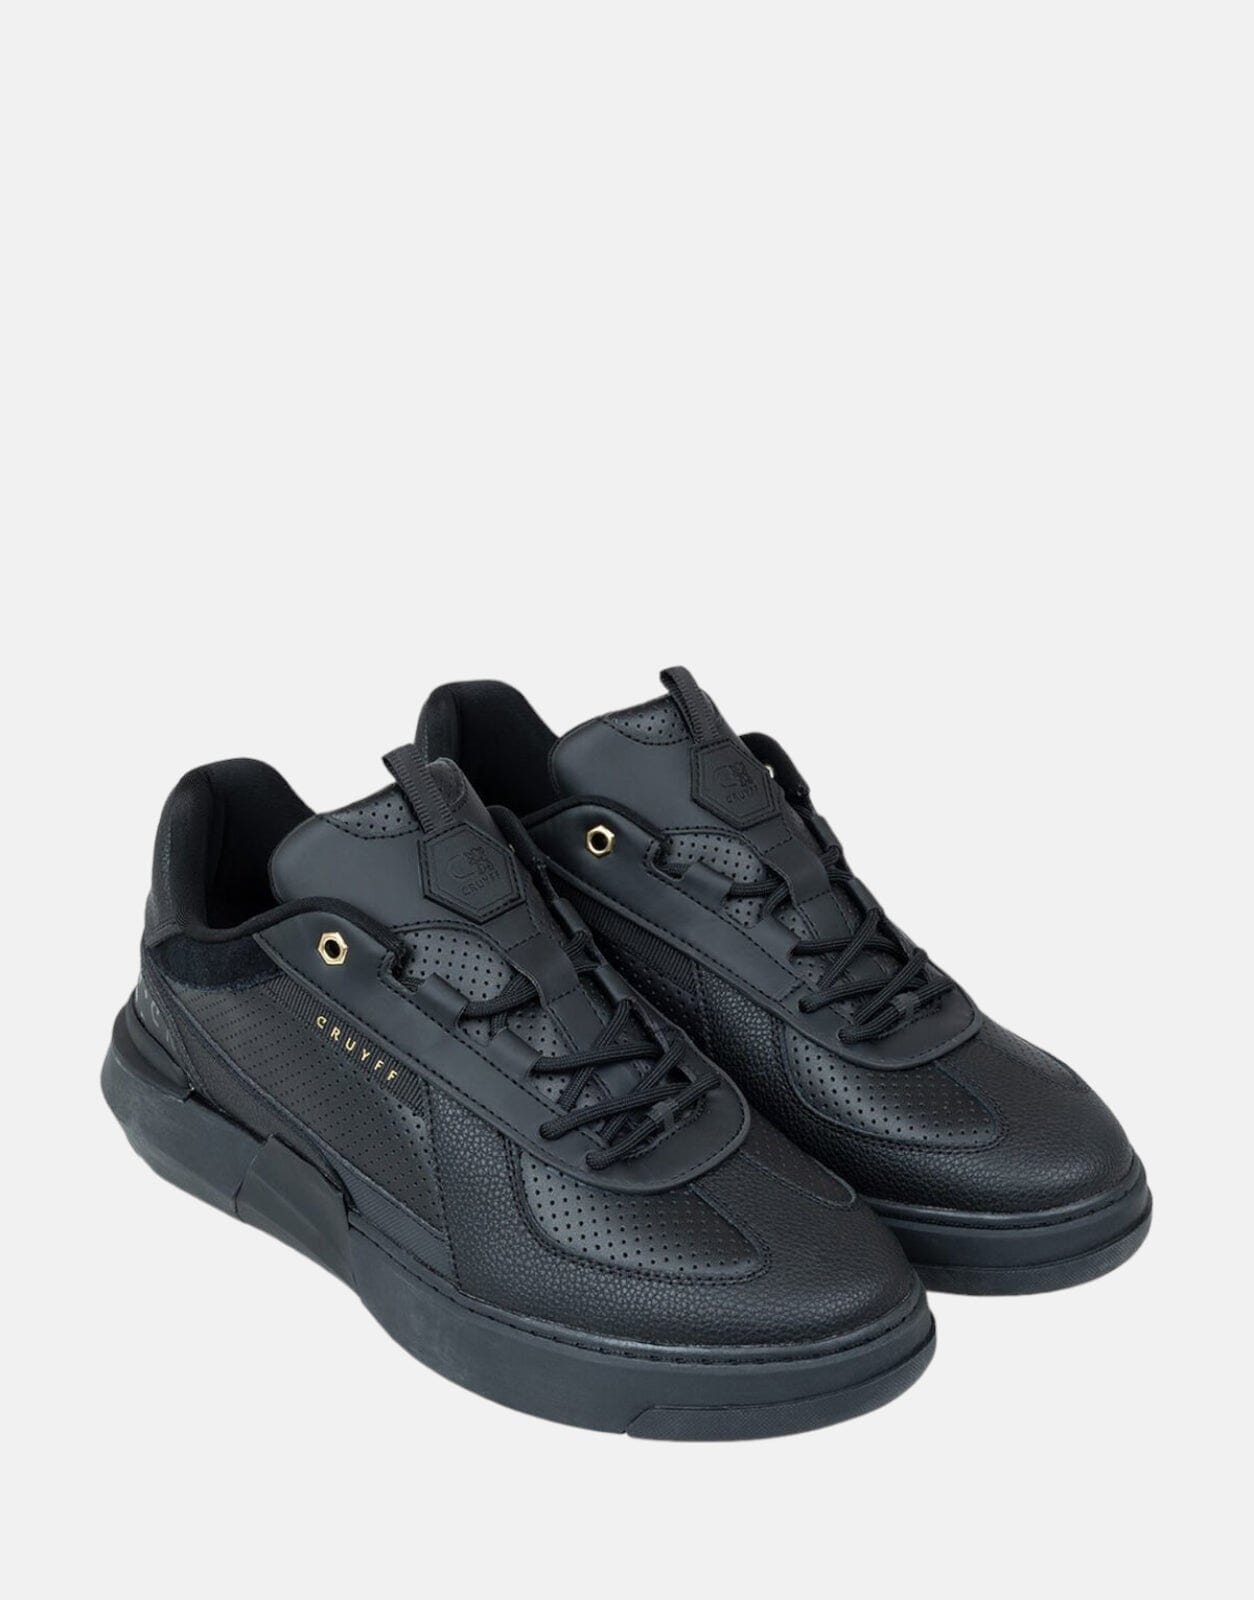 Cruyff Shatter Black/Gold Sneakers - Subwear